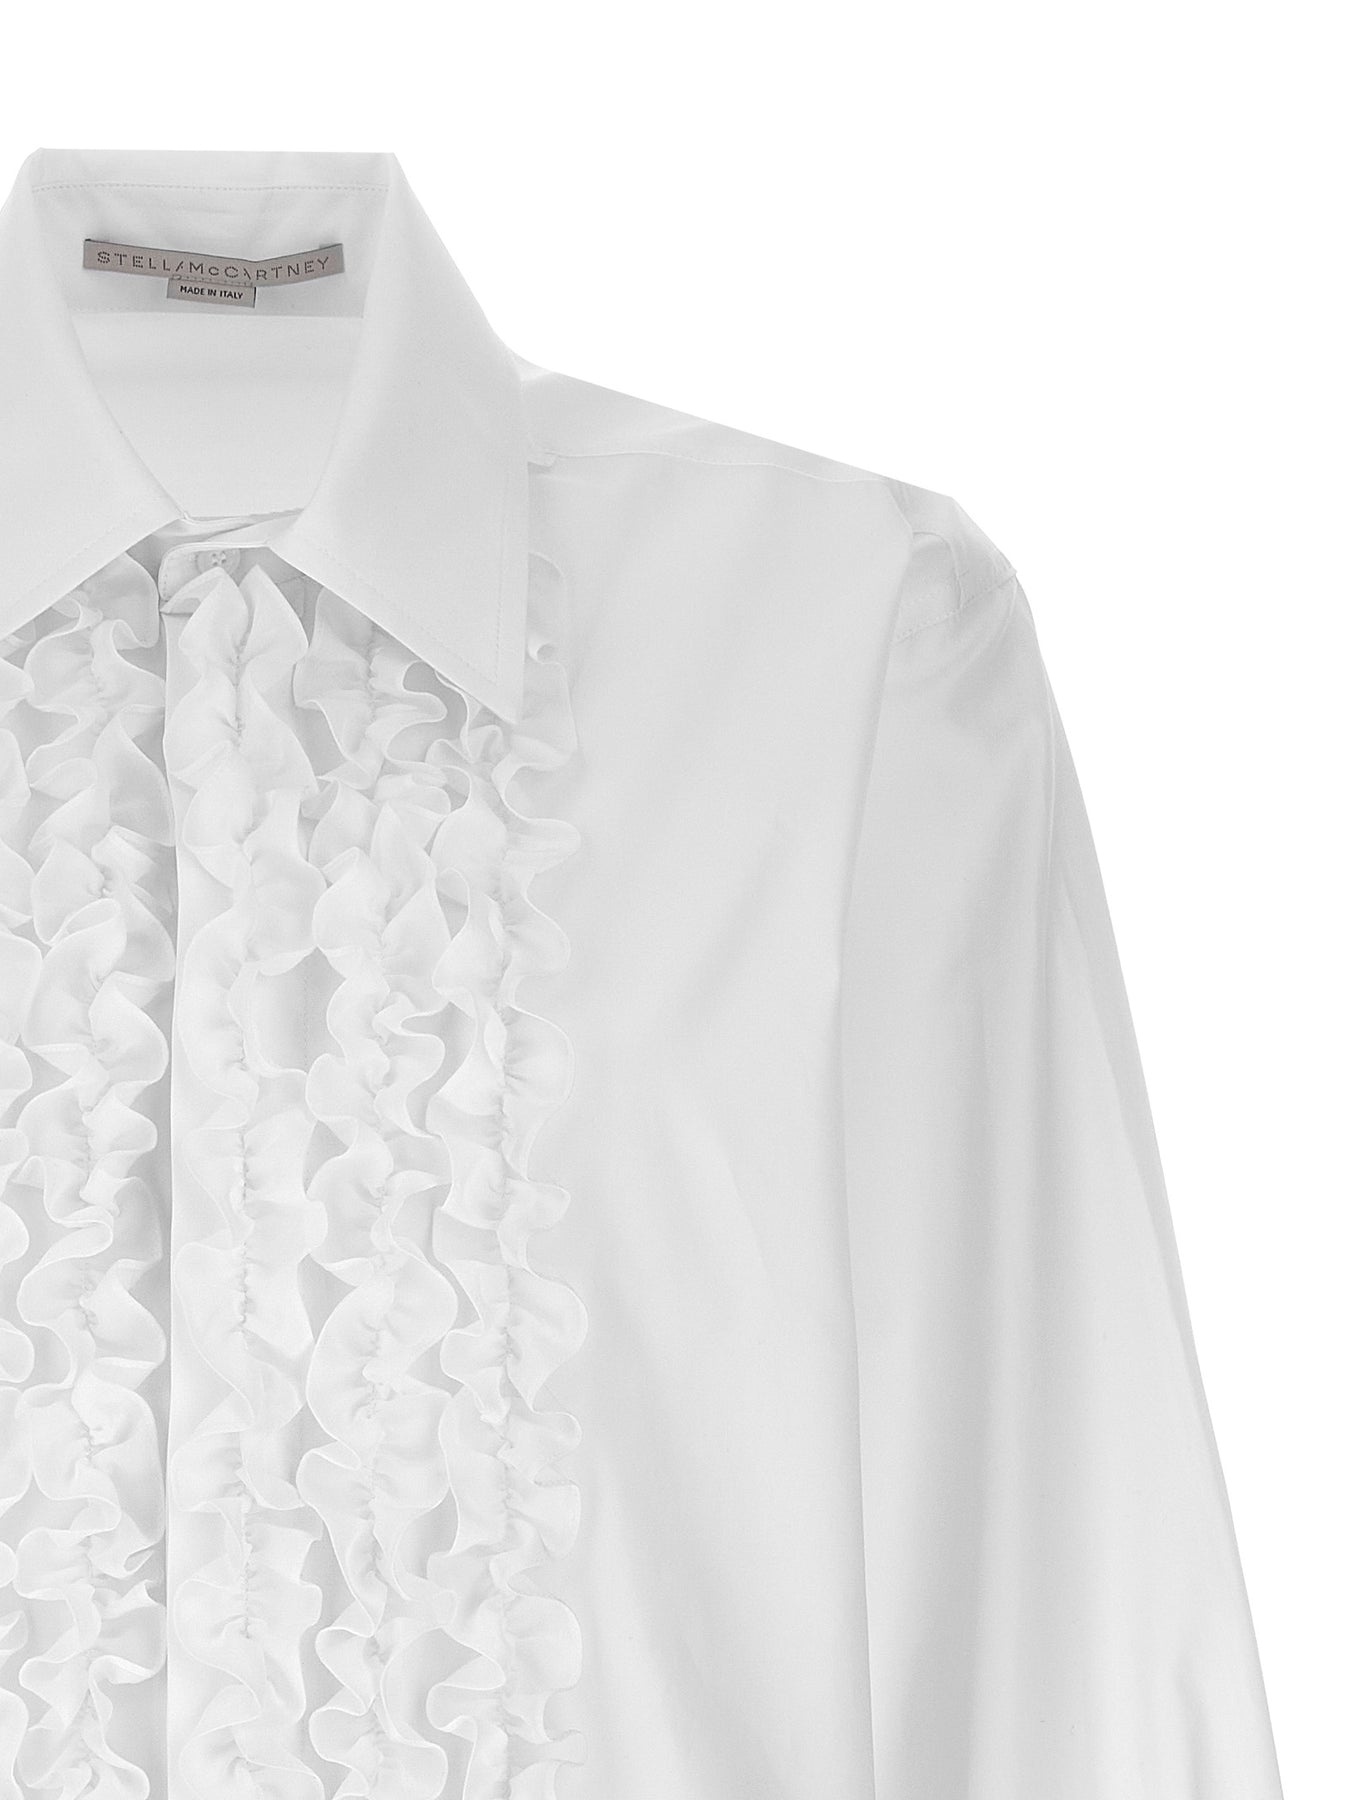 Ruffles Shirt Shirt, Blouse White - 3